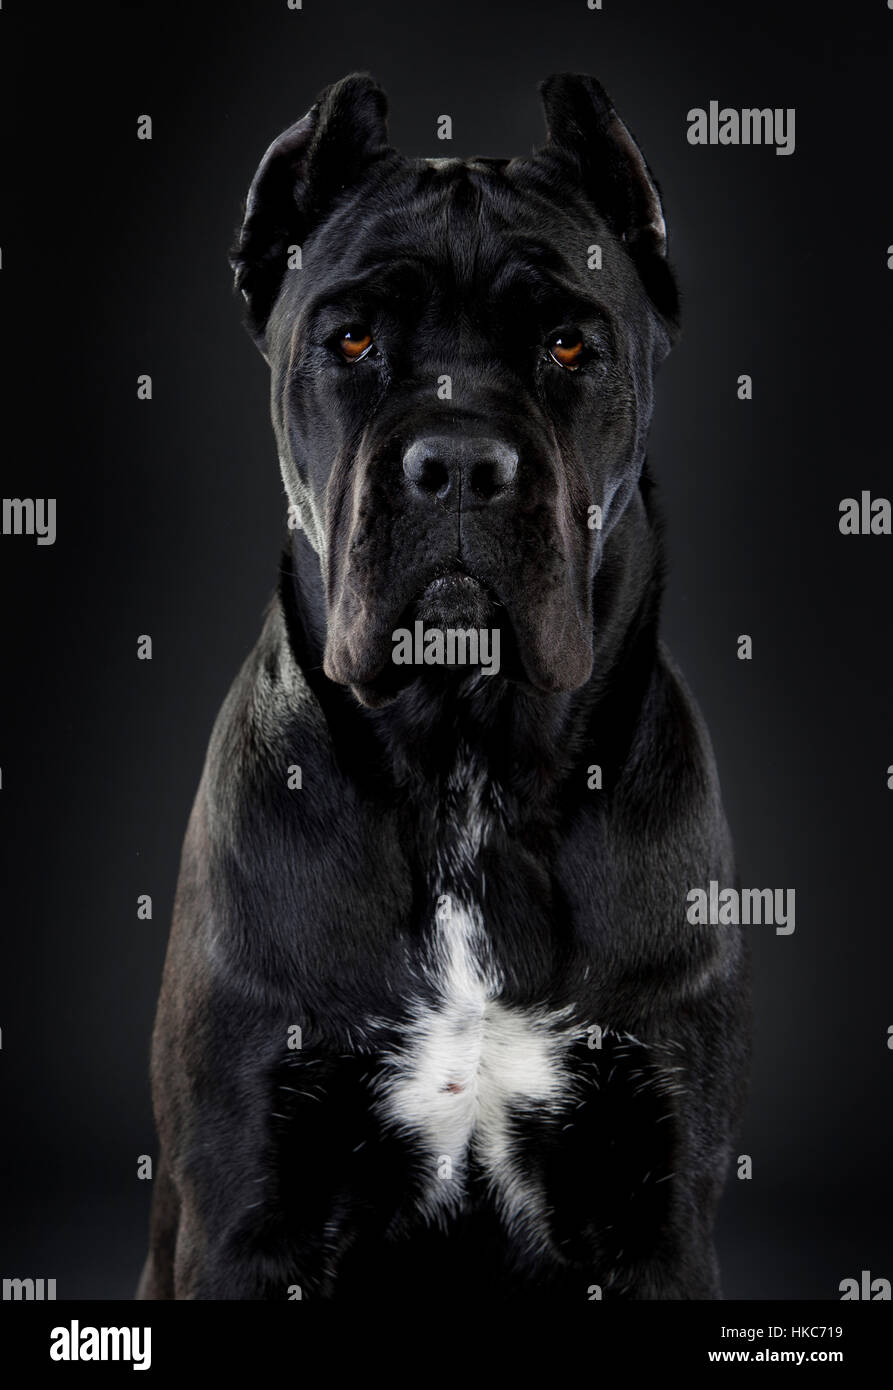 cane corso portrait Stock Photo - Alamy